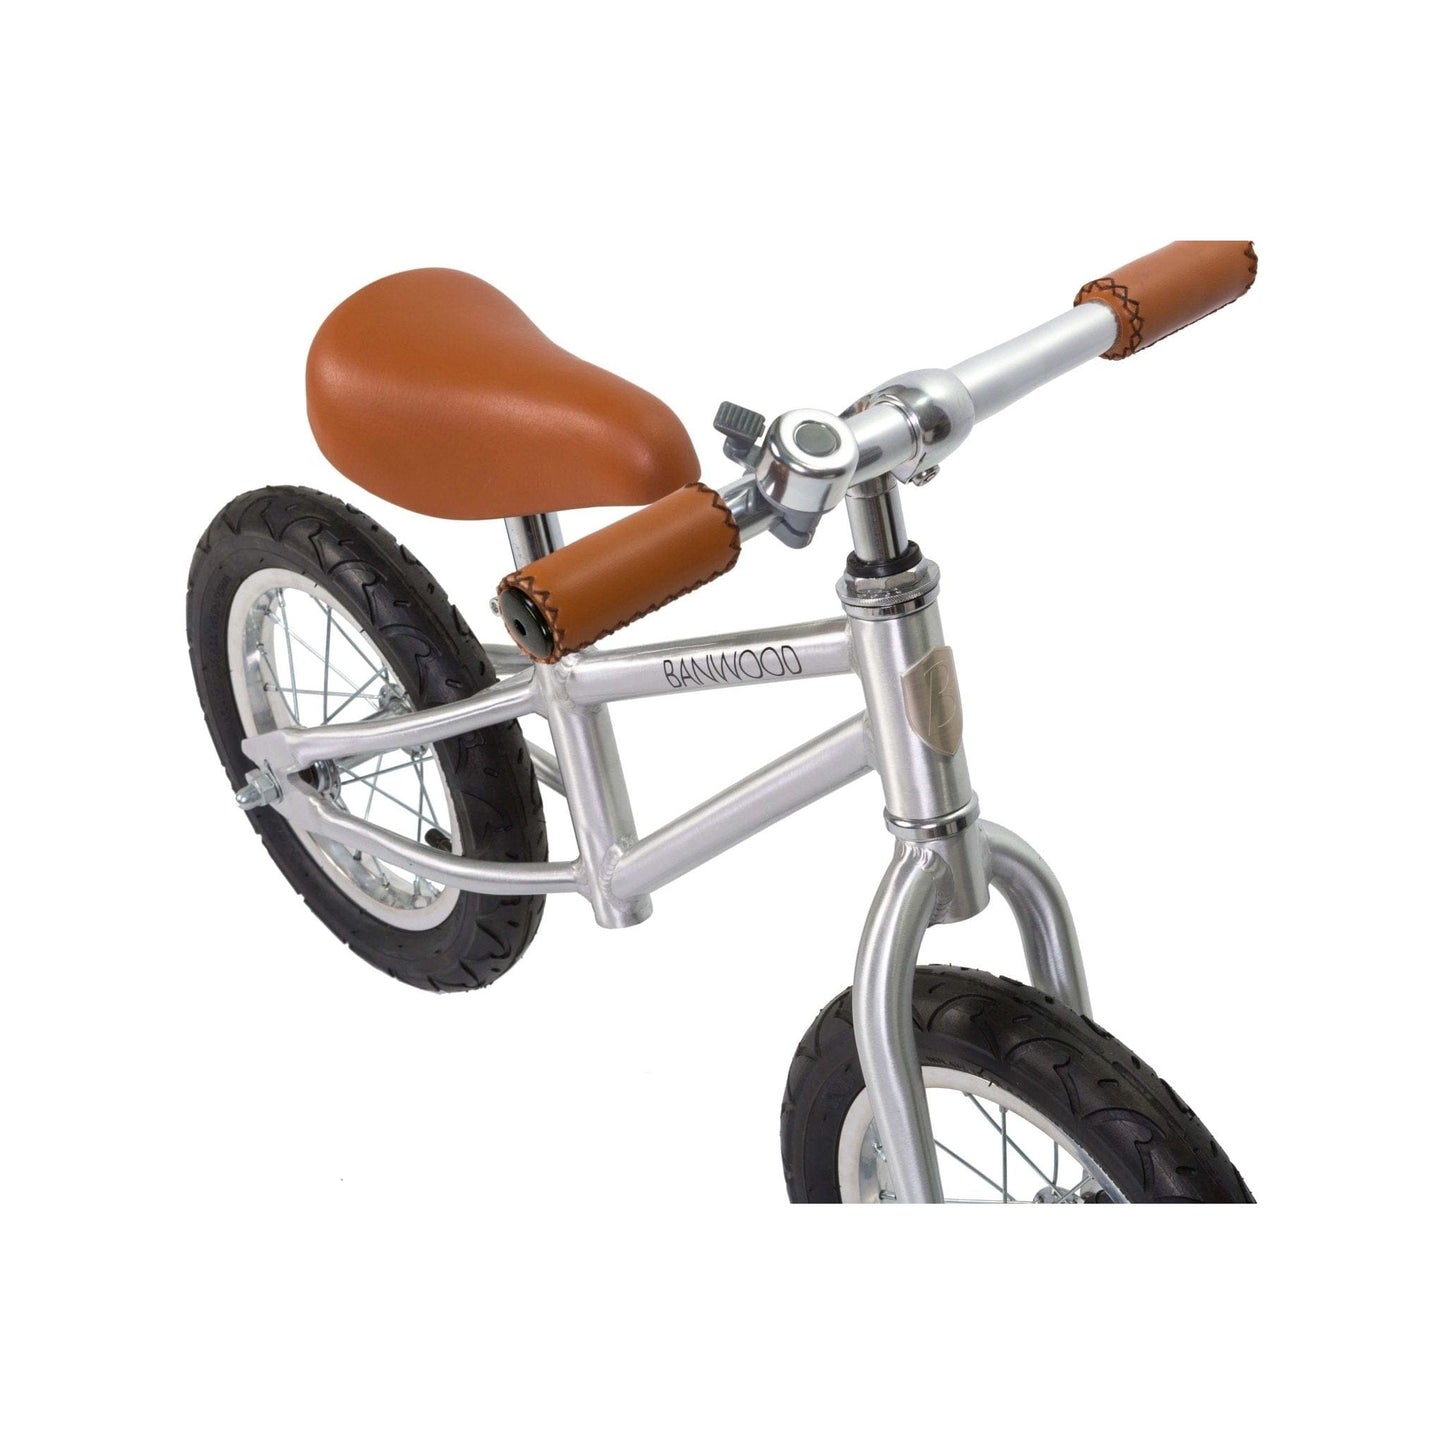 Banwood First Go Balance Bike - Age 3-5 - Chrome - The Online Toy Shop5